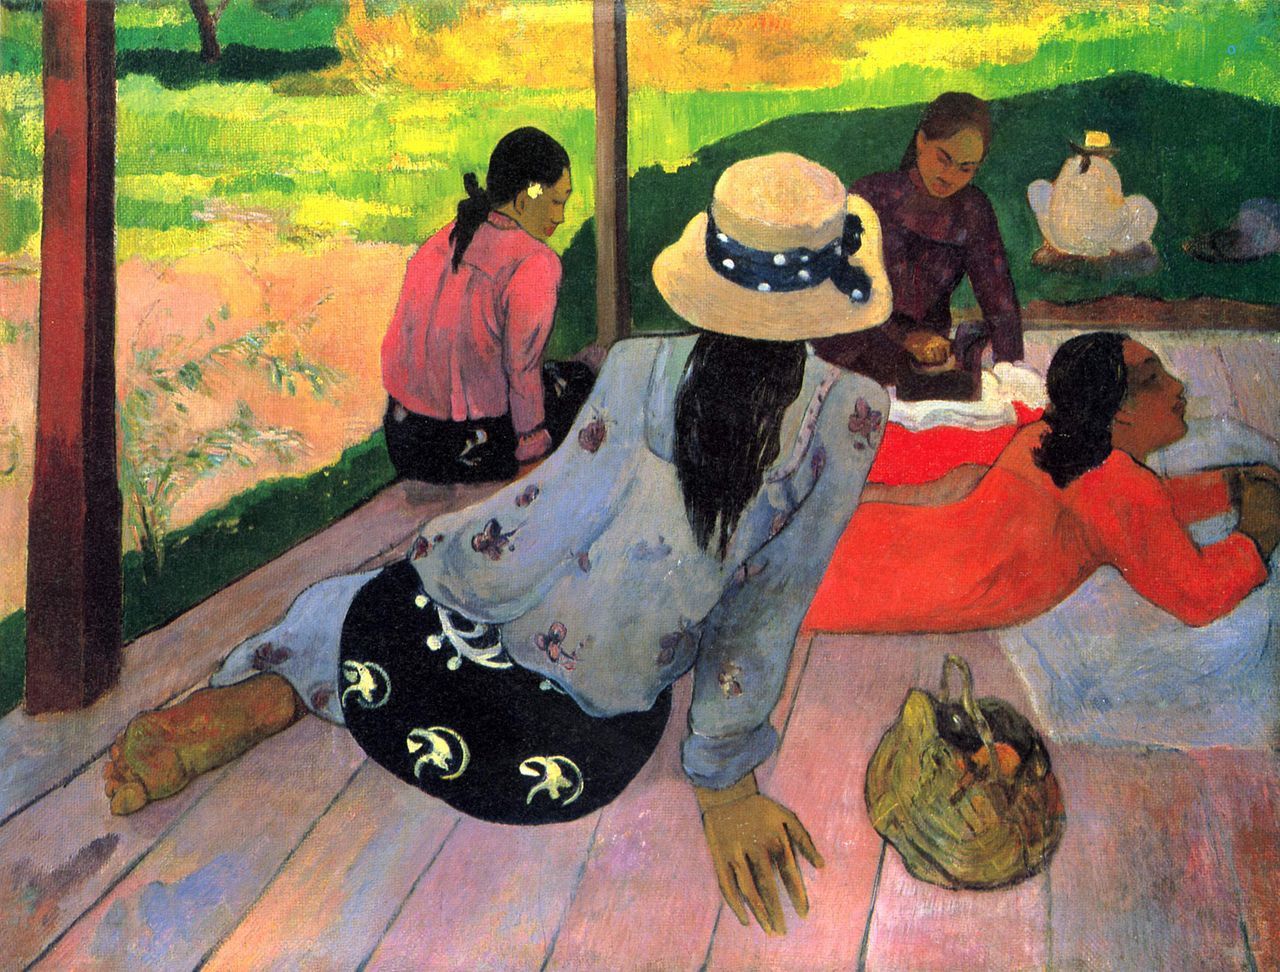 印象派怪客高更（Paul Gauguin）作品「午憩」（Midday Nap）1892-94